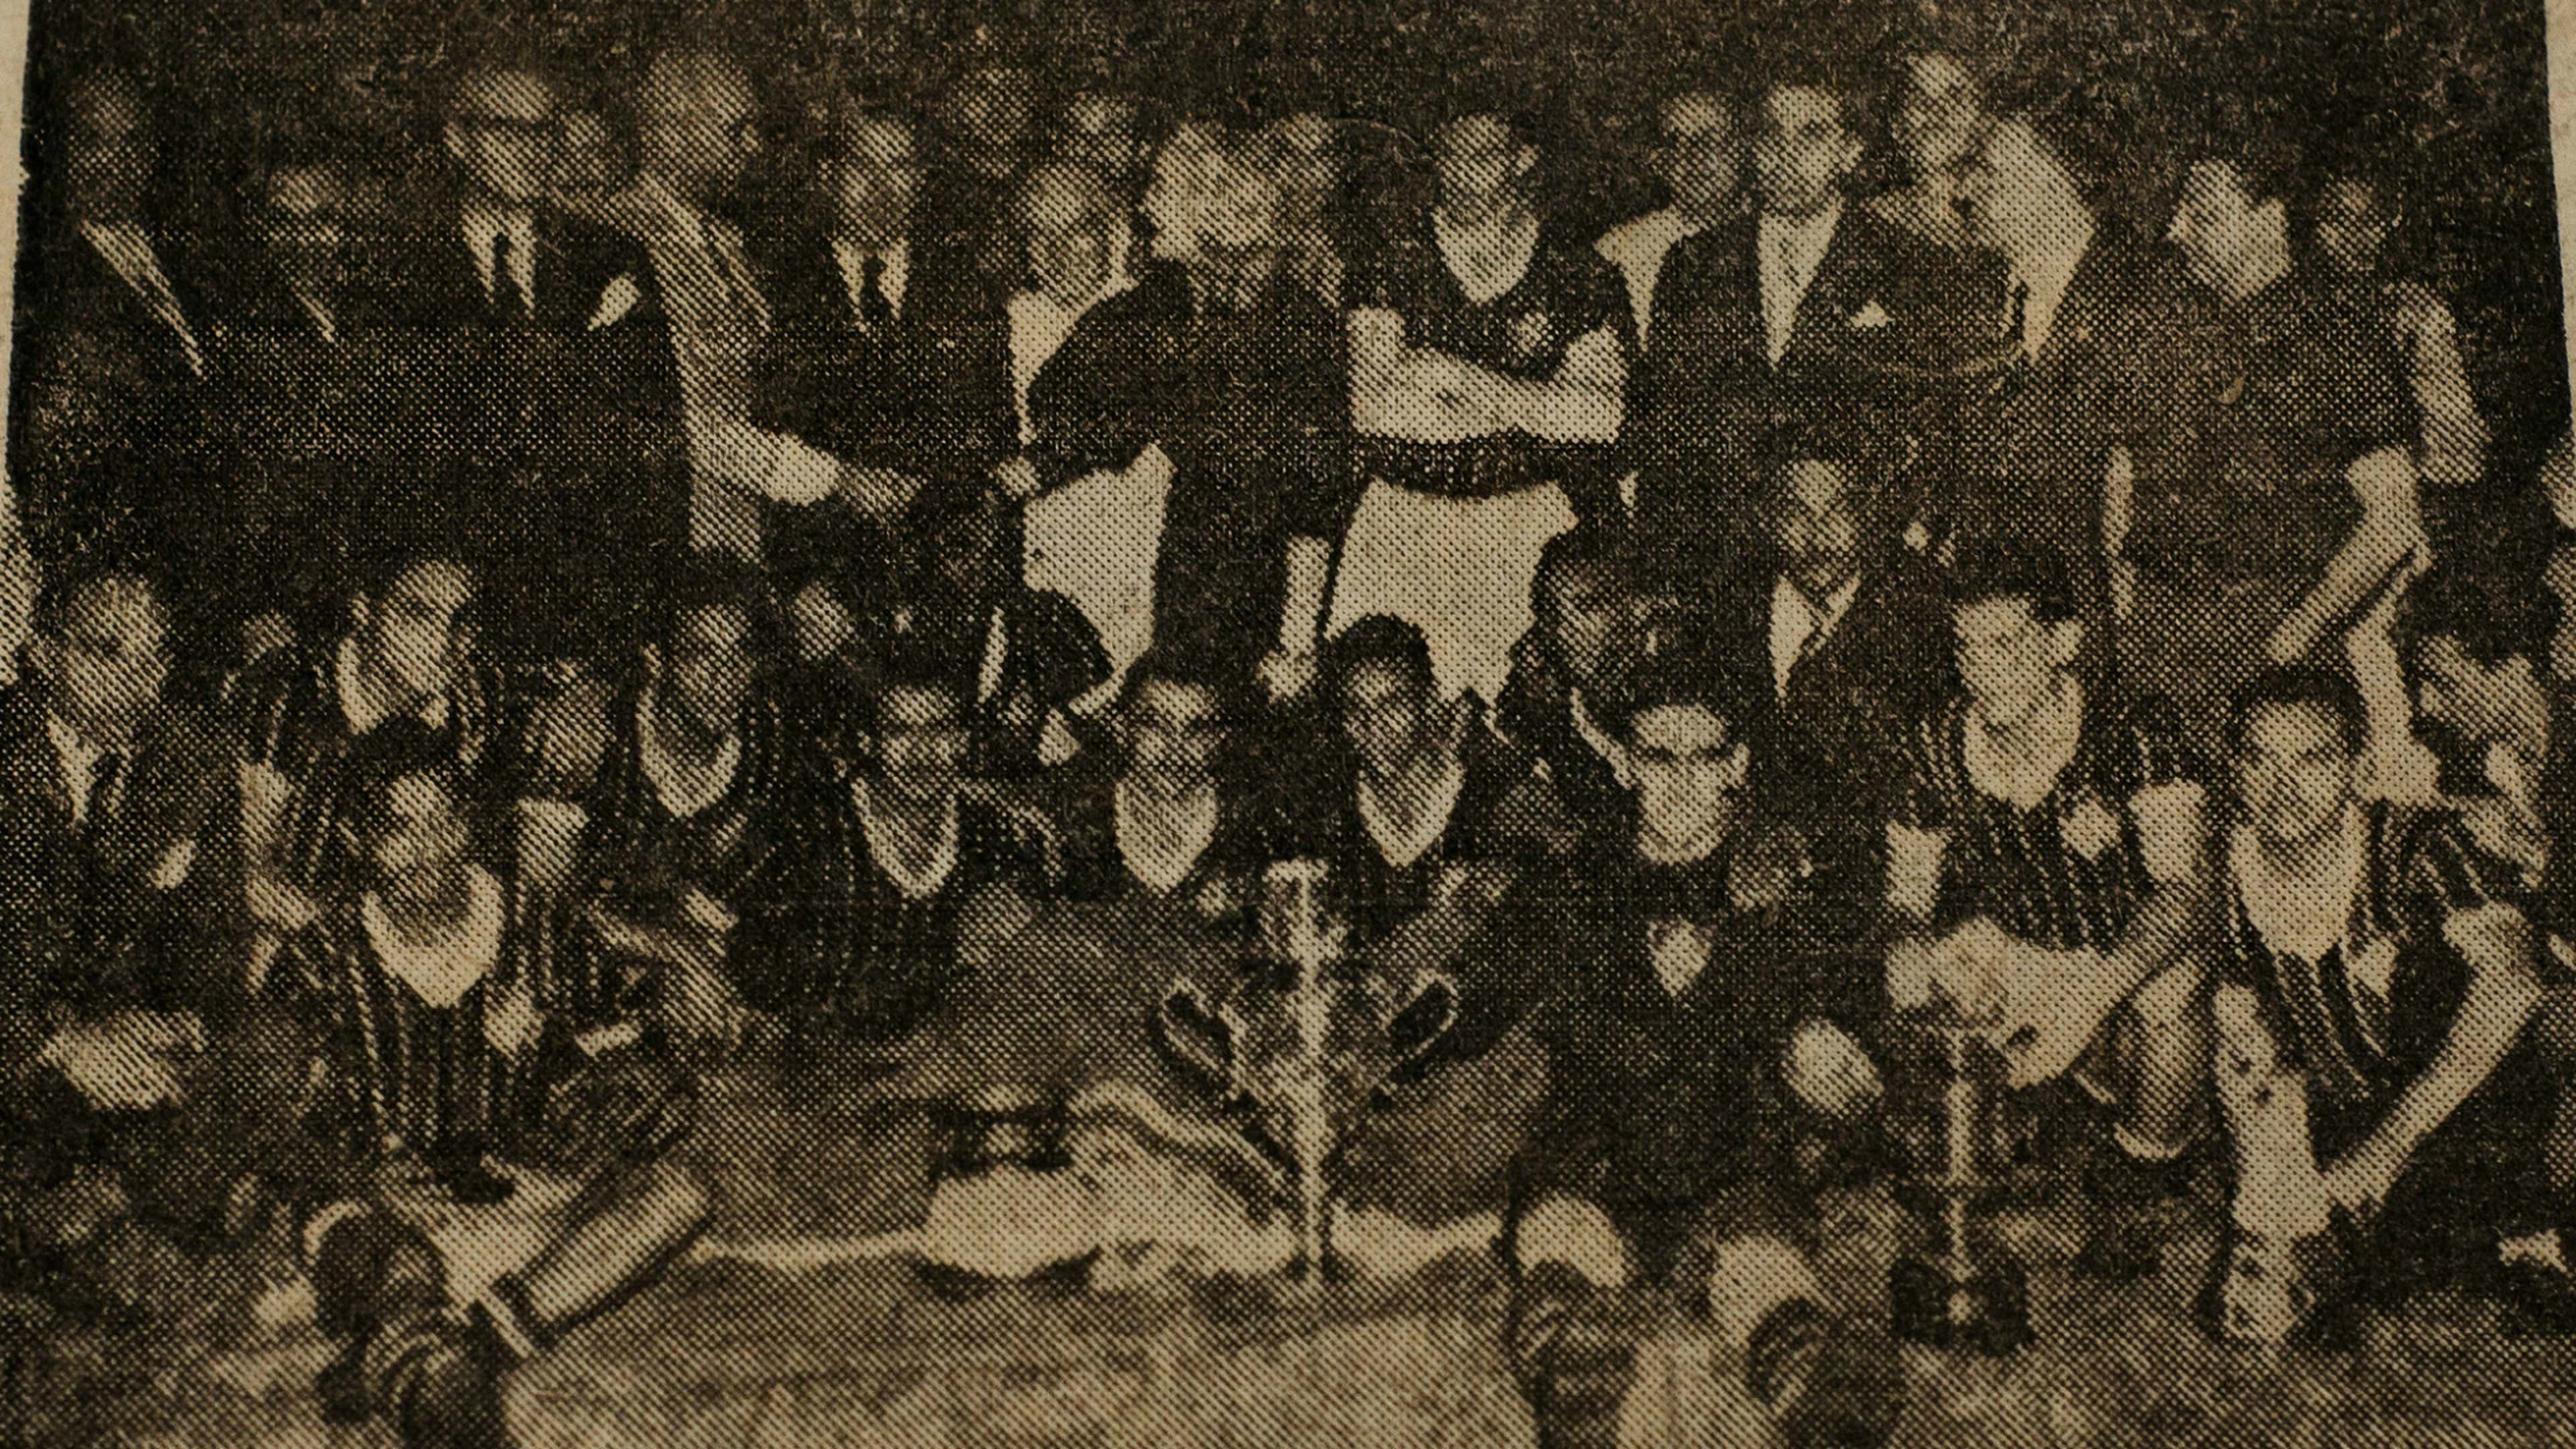 Fluminense campeão da Copa Rio de 1952.  Fluminense, Fluminense football  club, Futebol